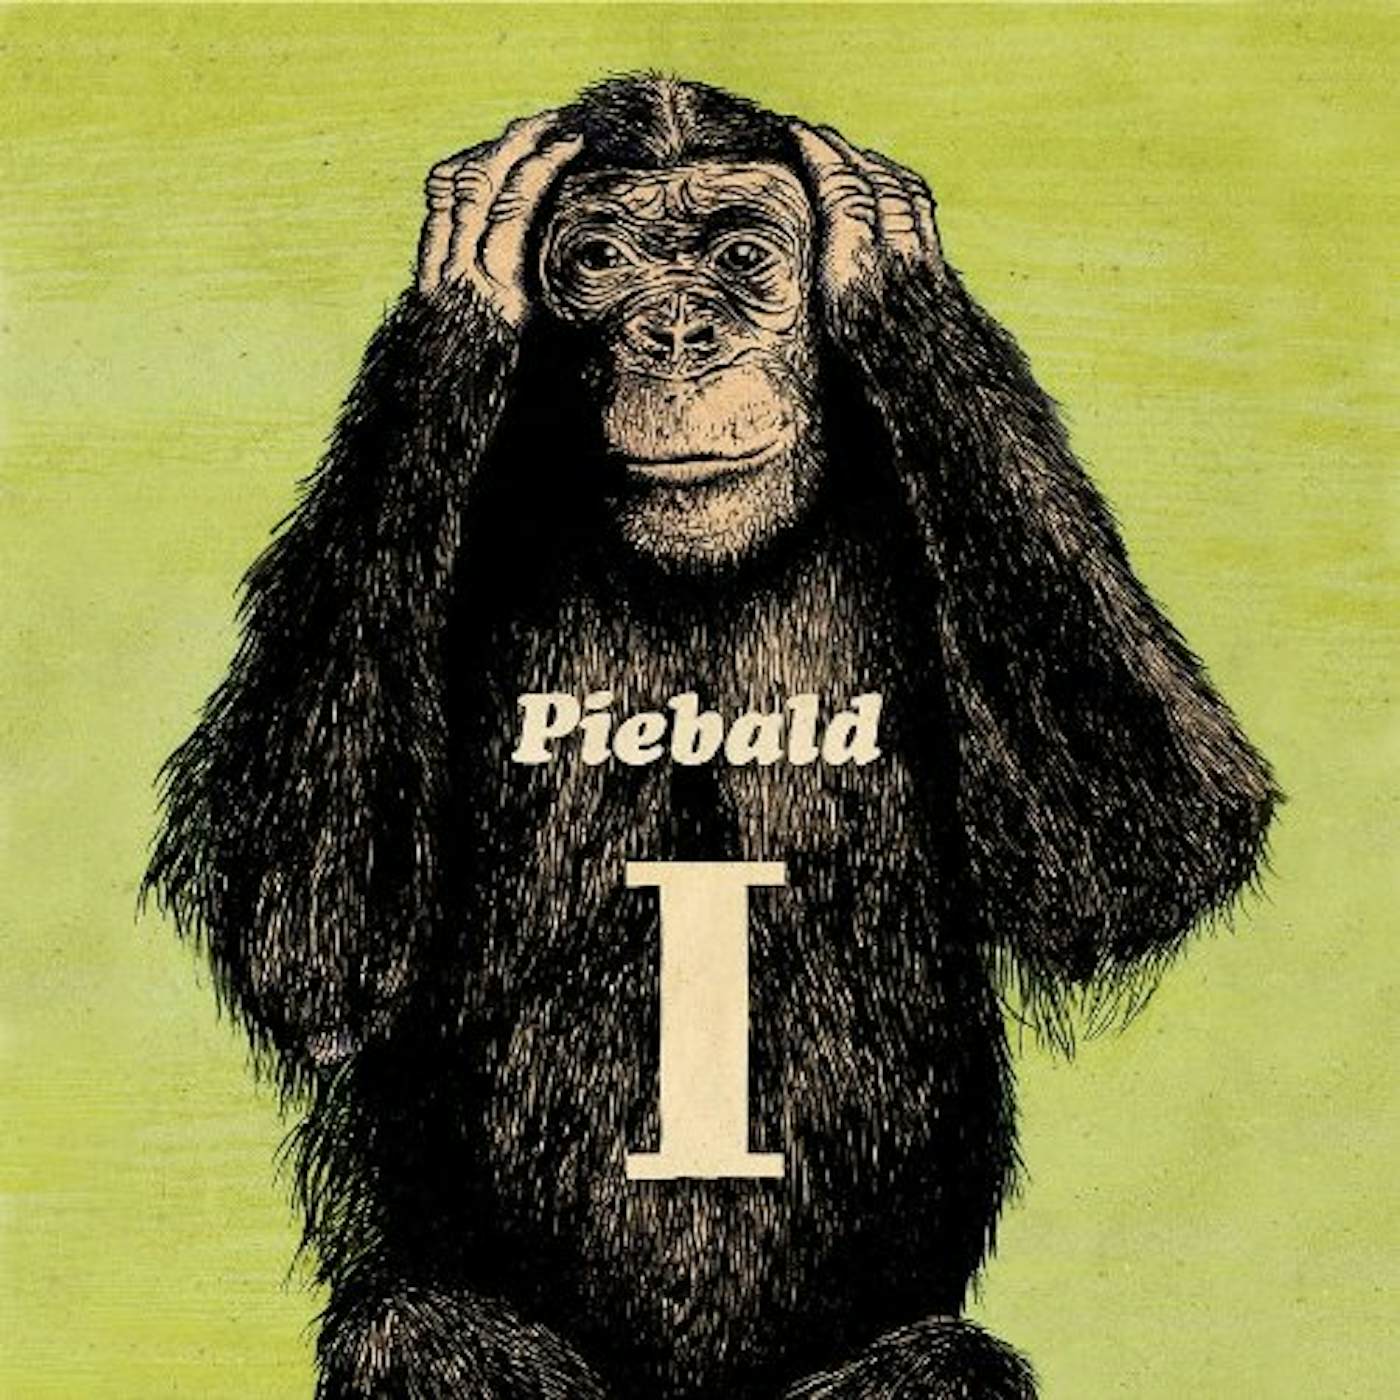 Piebald VOLUME 1 CD